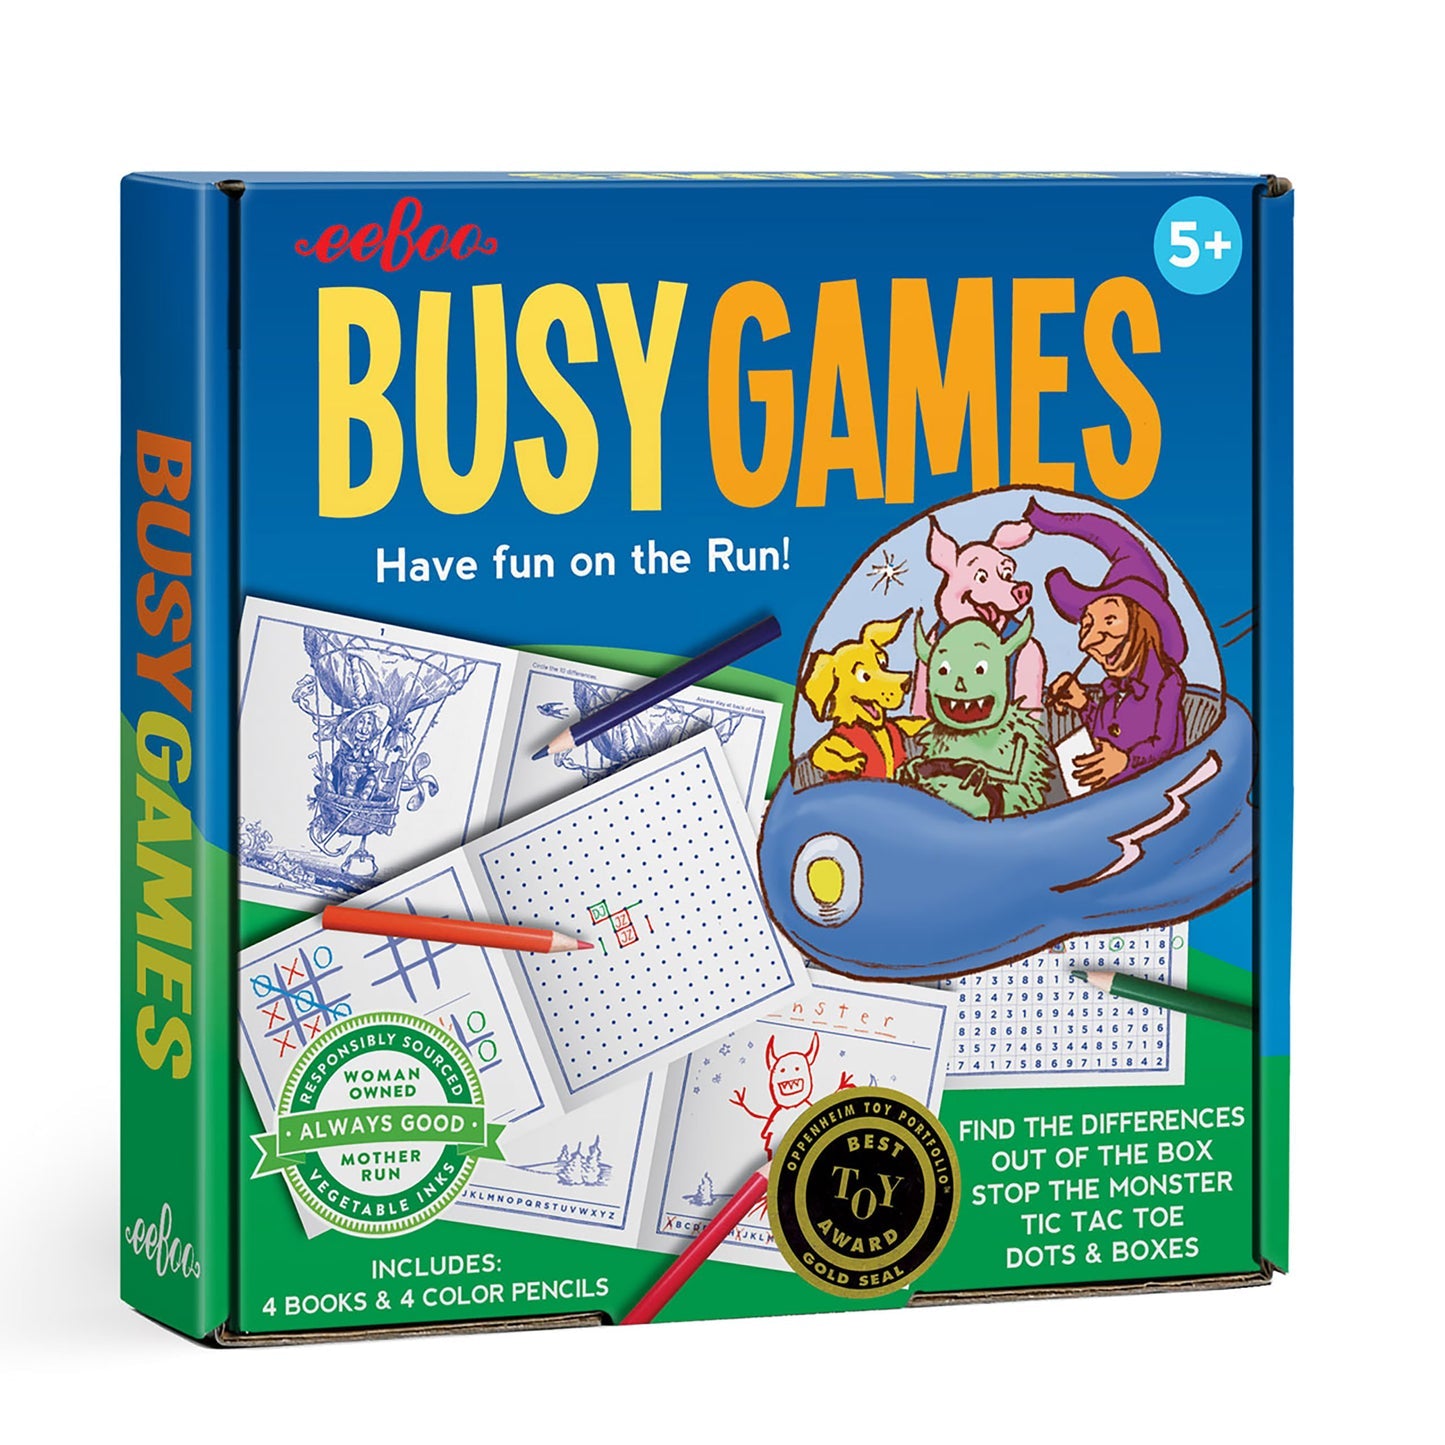 eeBoo "Busy Games" Travel Set